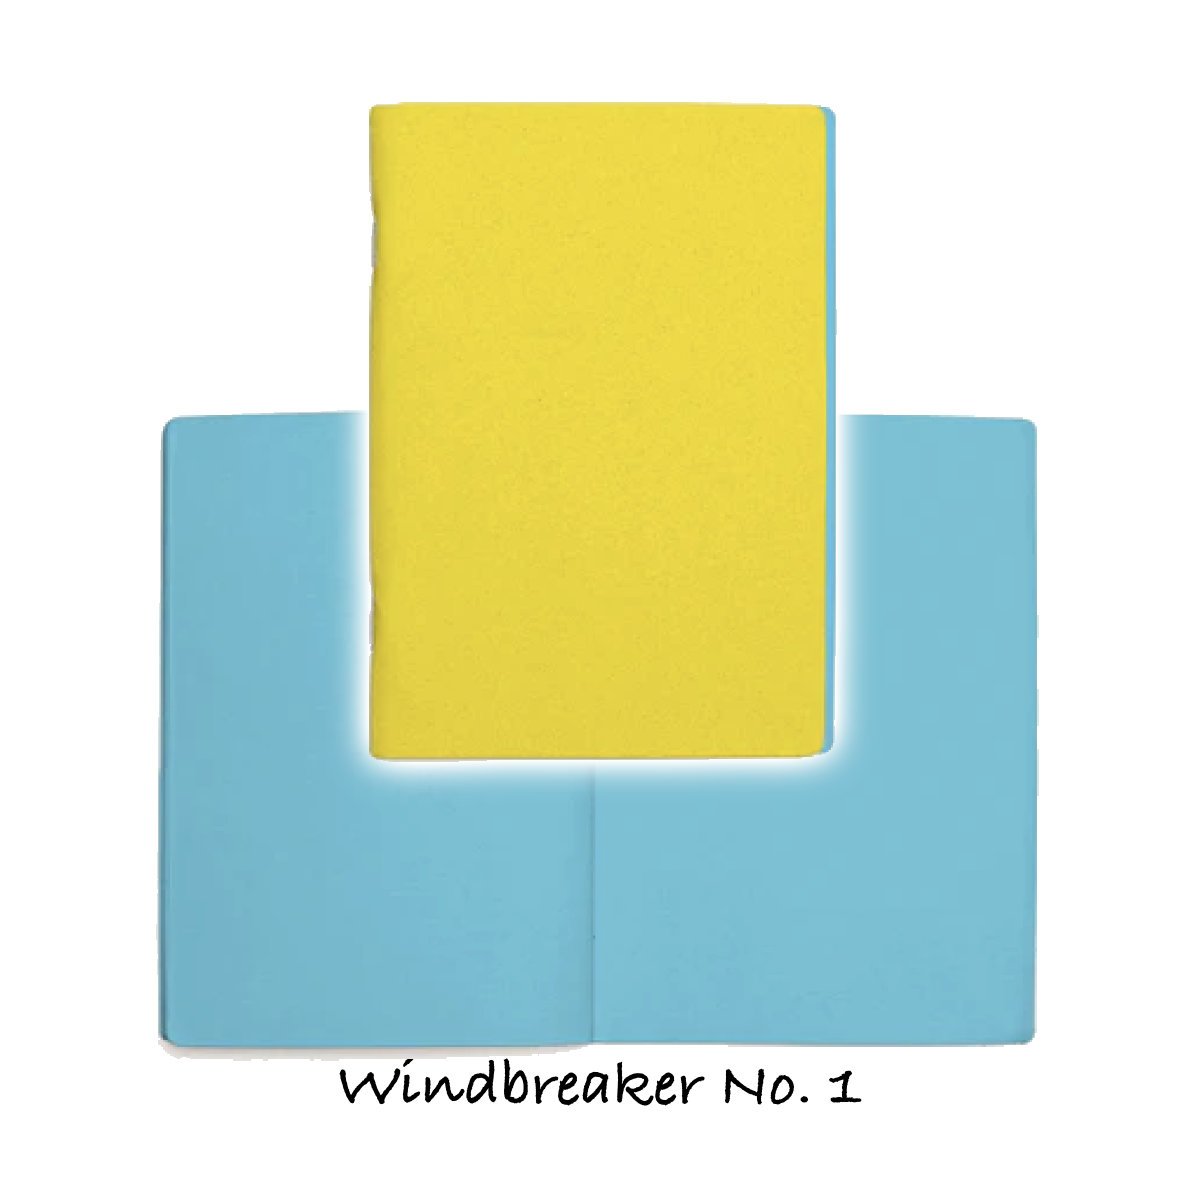 Uglybooks - Windbreaker No. 1 - Single Notebook - Notegeist